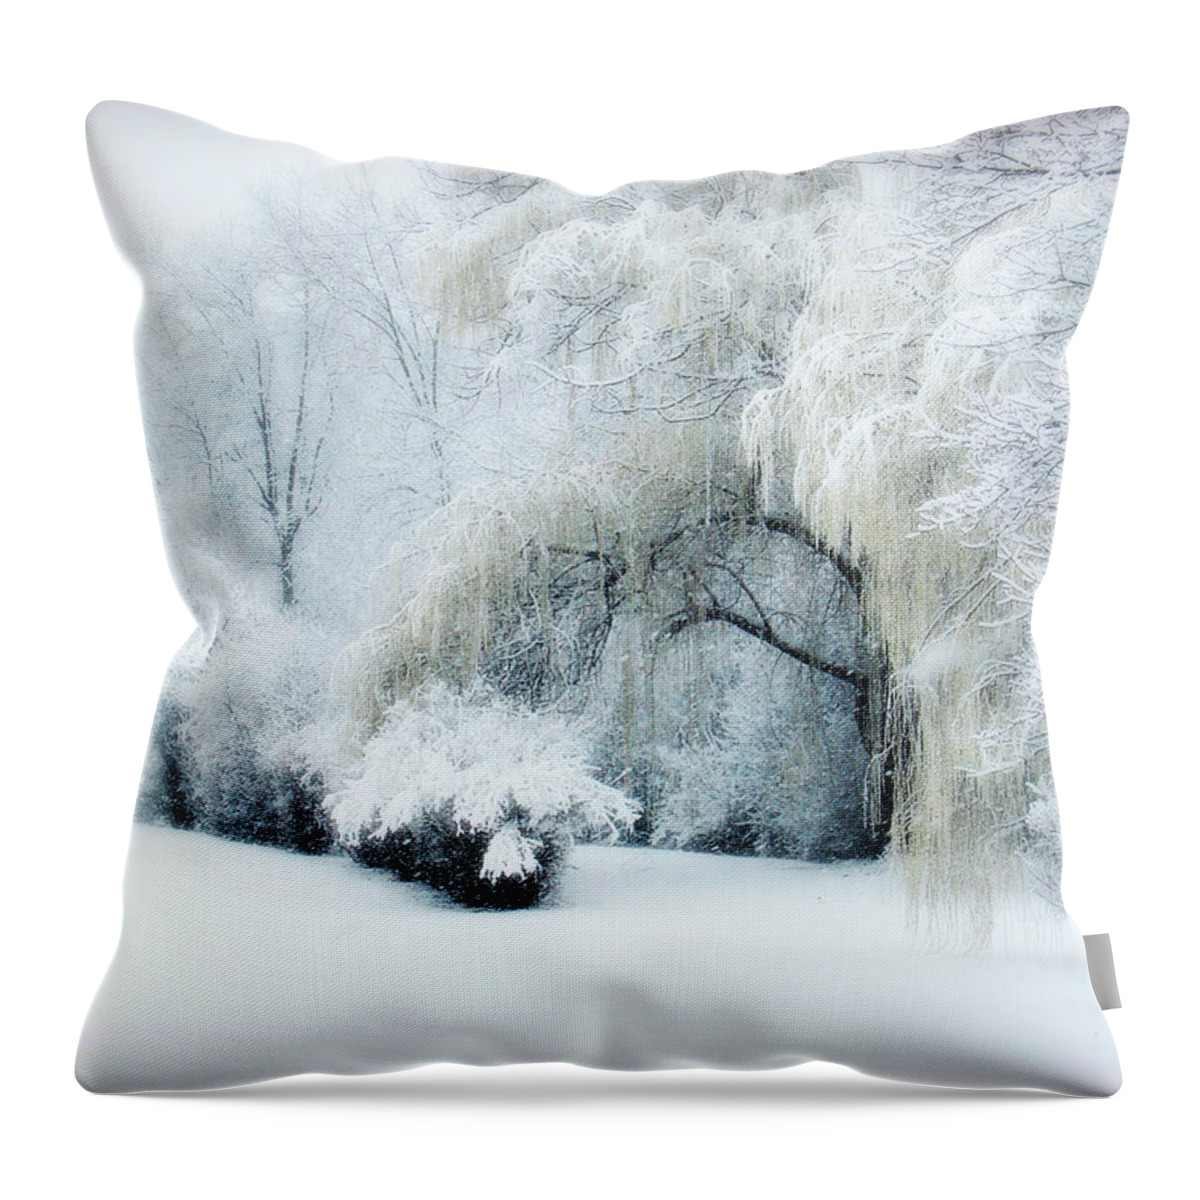 Snow Dream Throw Pillow featuring the photograph Snow Dream by Julie Palencia